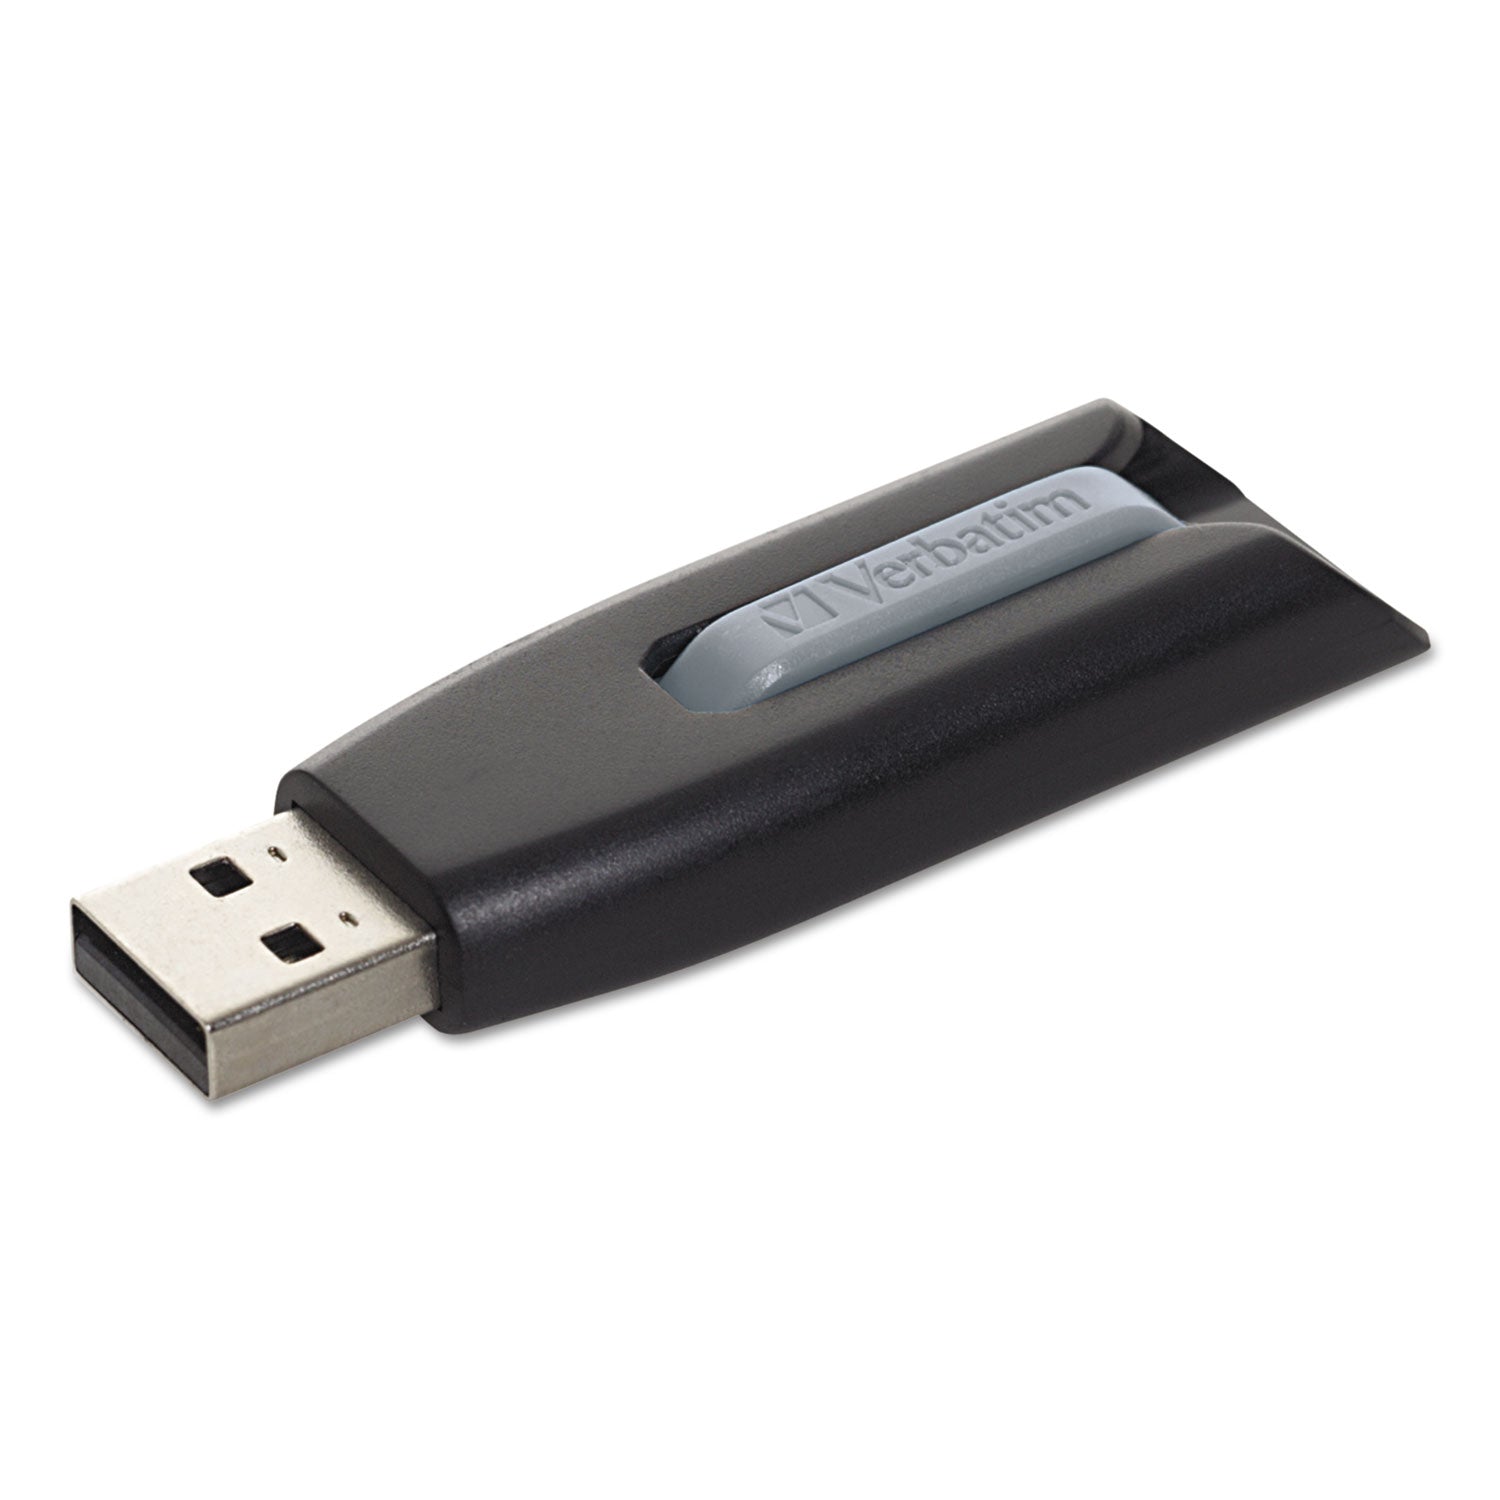 Store 'n' Go V3 USB 3.0 Drive, 64 GB, Black/Gray - 